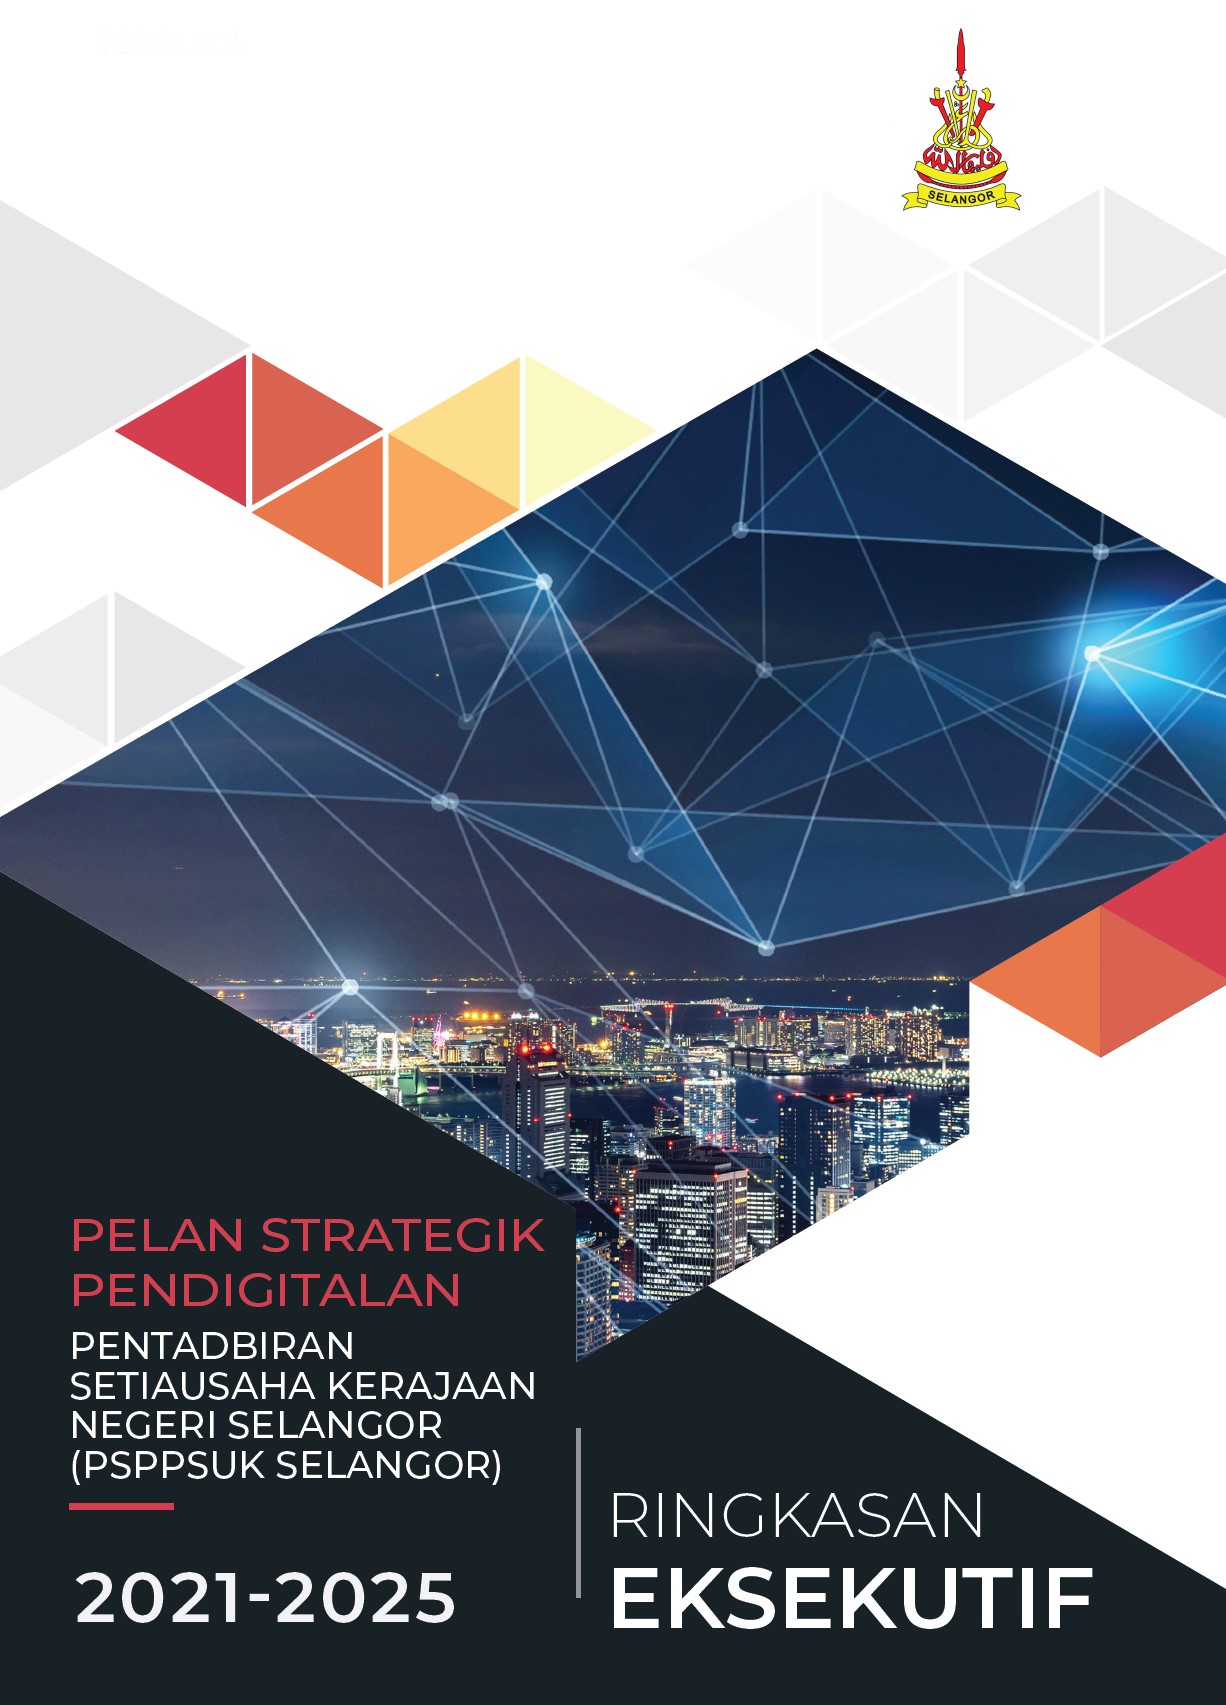 Pelan Strategik Pendigitalan 2021